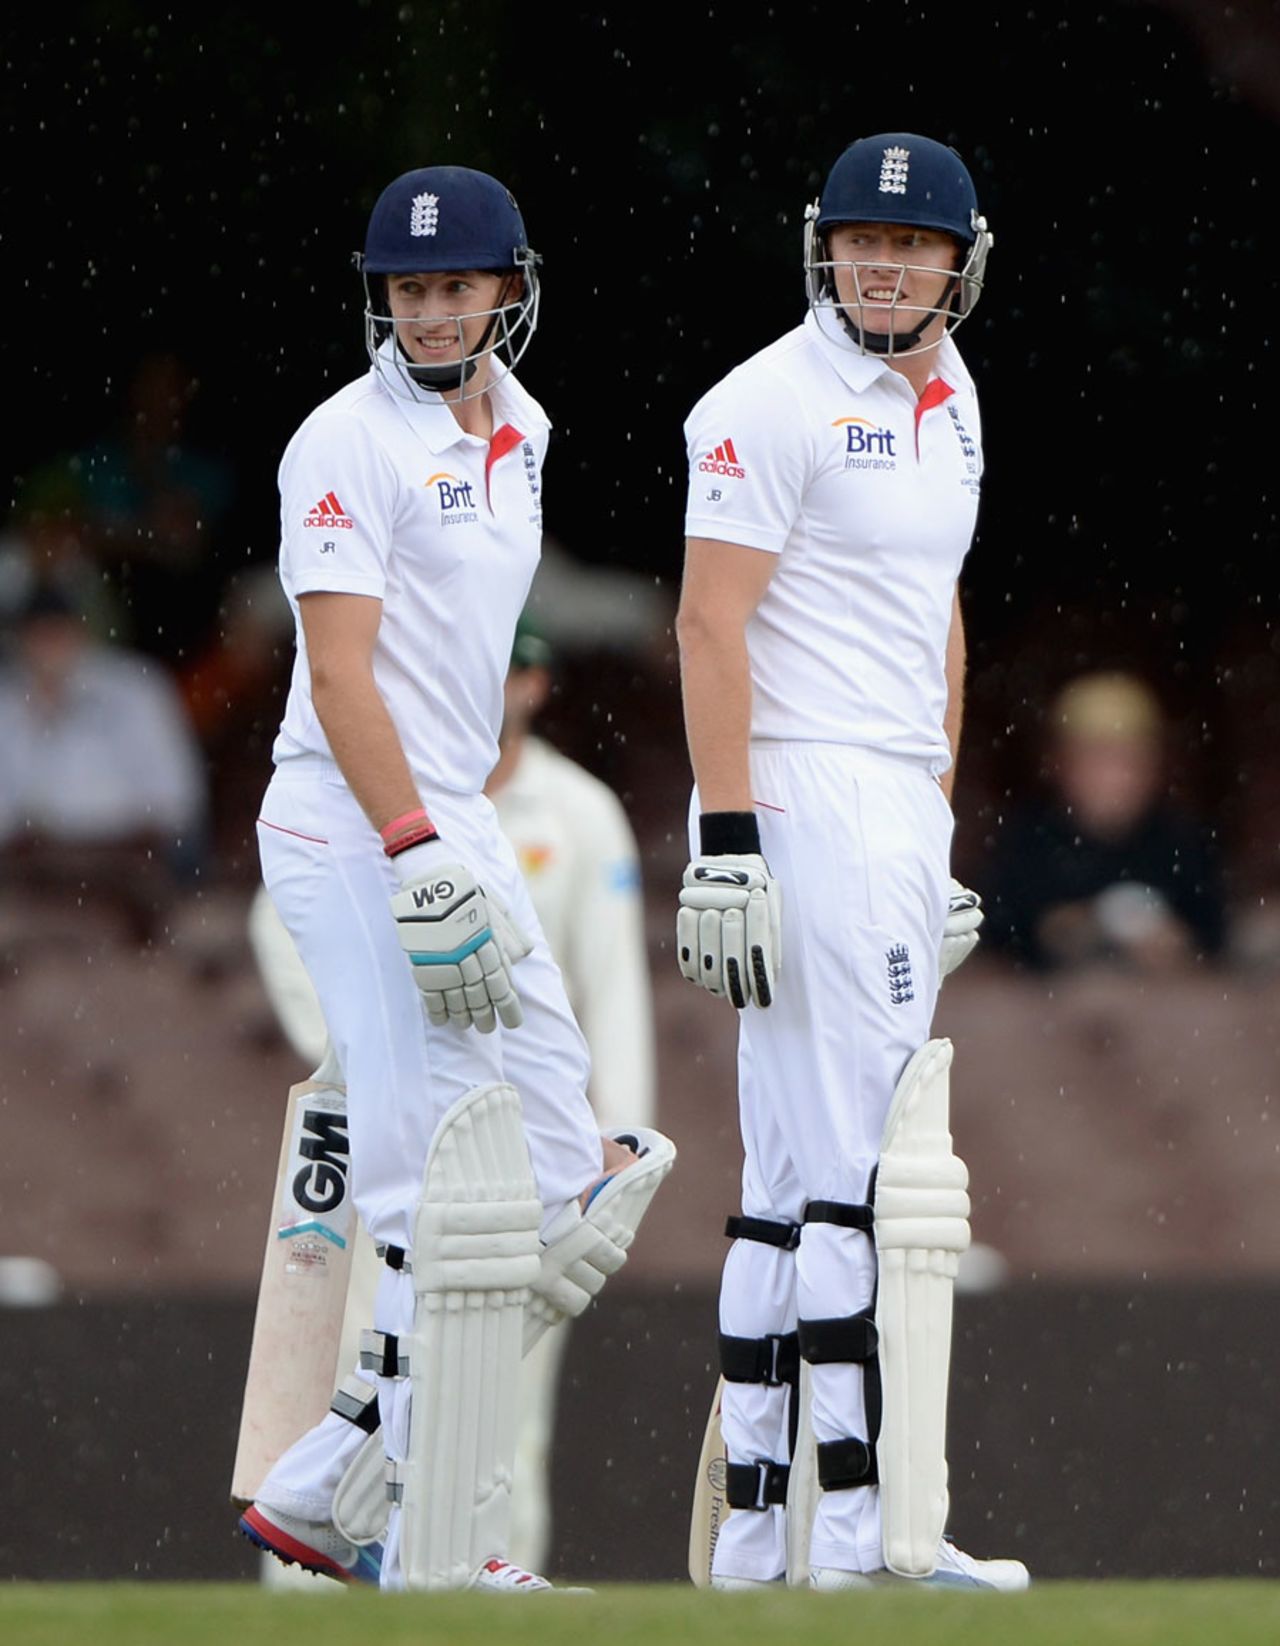 Joe Root and Jonny Bairstow put on 106 for the sixth wicket, Cricket Australia Invitational XI v England, Sydney, 3rd day, November 15, 2013